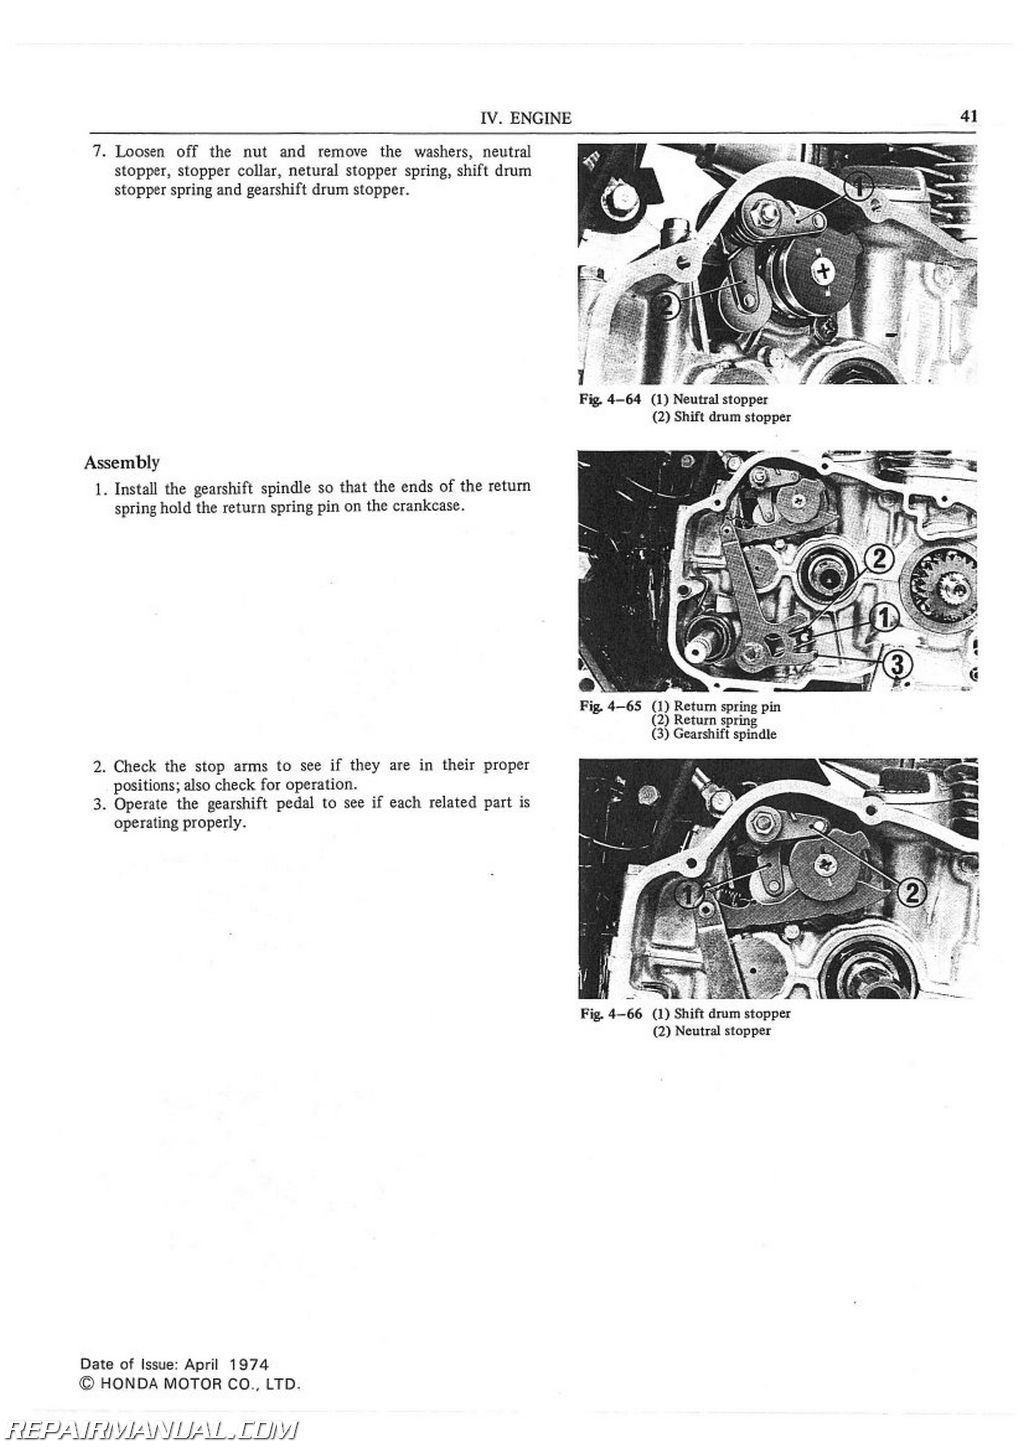 Honda Atv Shop Manual Download